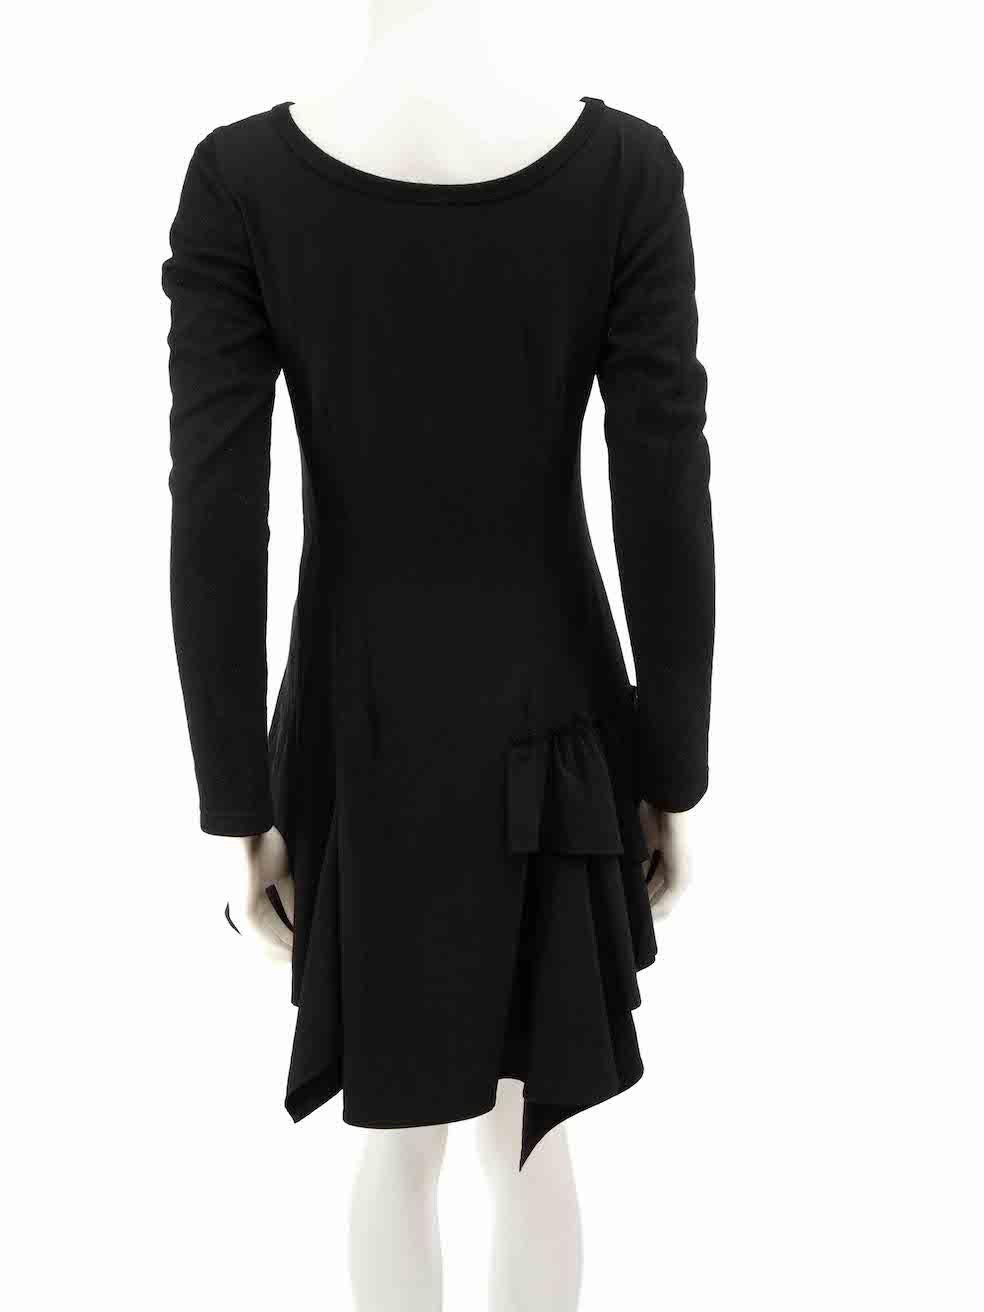 Yohji Yamamoto Black Ruffle Skirt Mini Dress Size S In Good Condition For Sale In London, GB